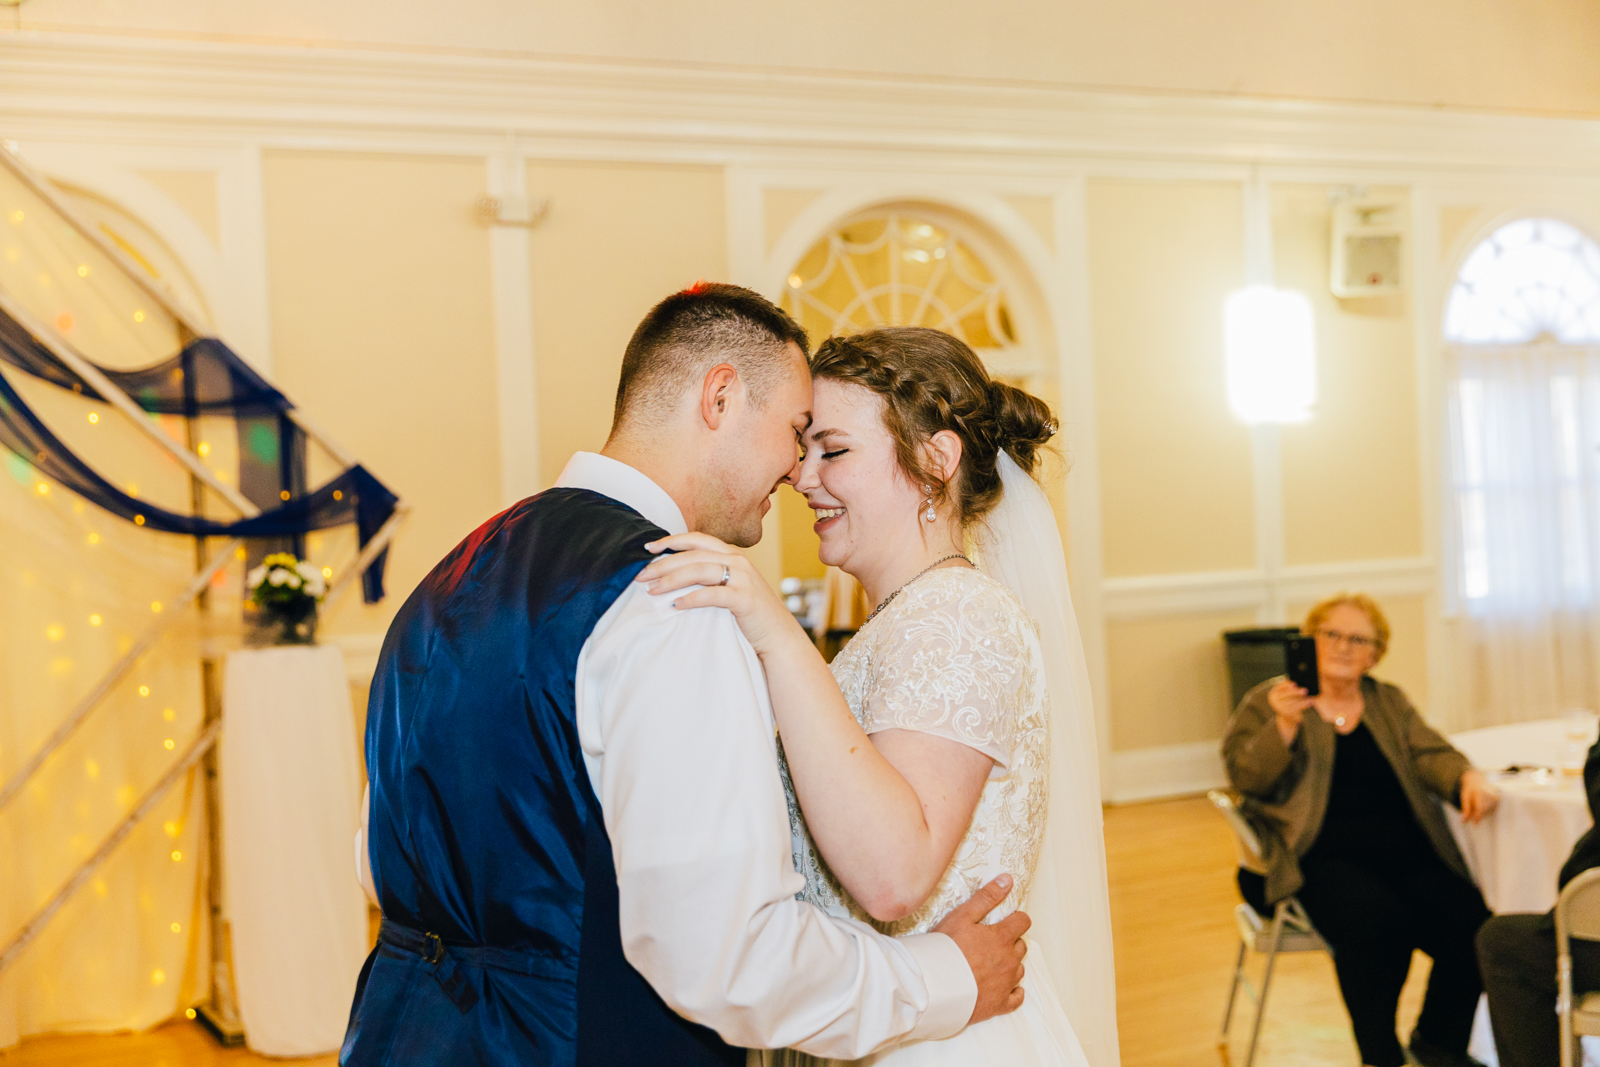 Jackson Hole wedding photographers capture First dance bride and groom dancing